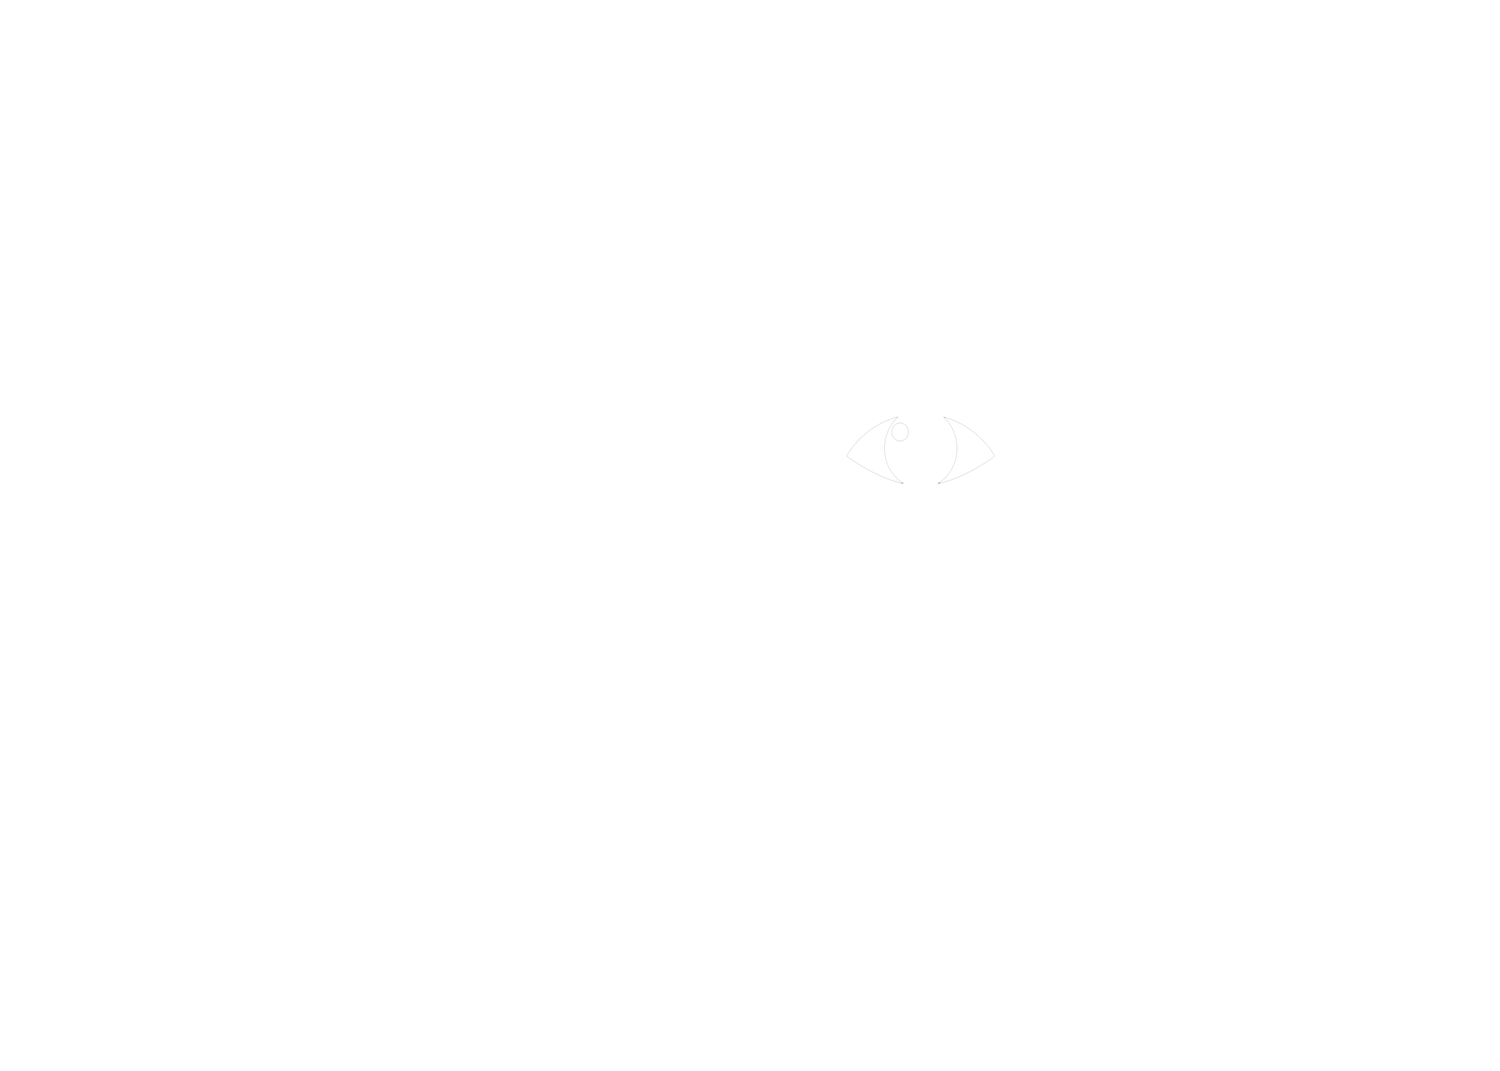 vision arcade